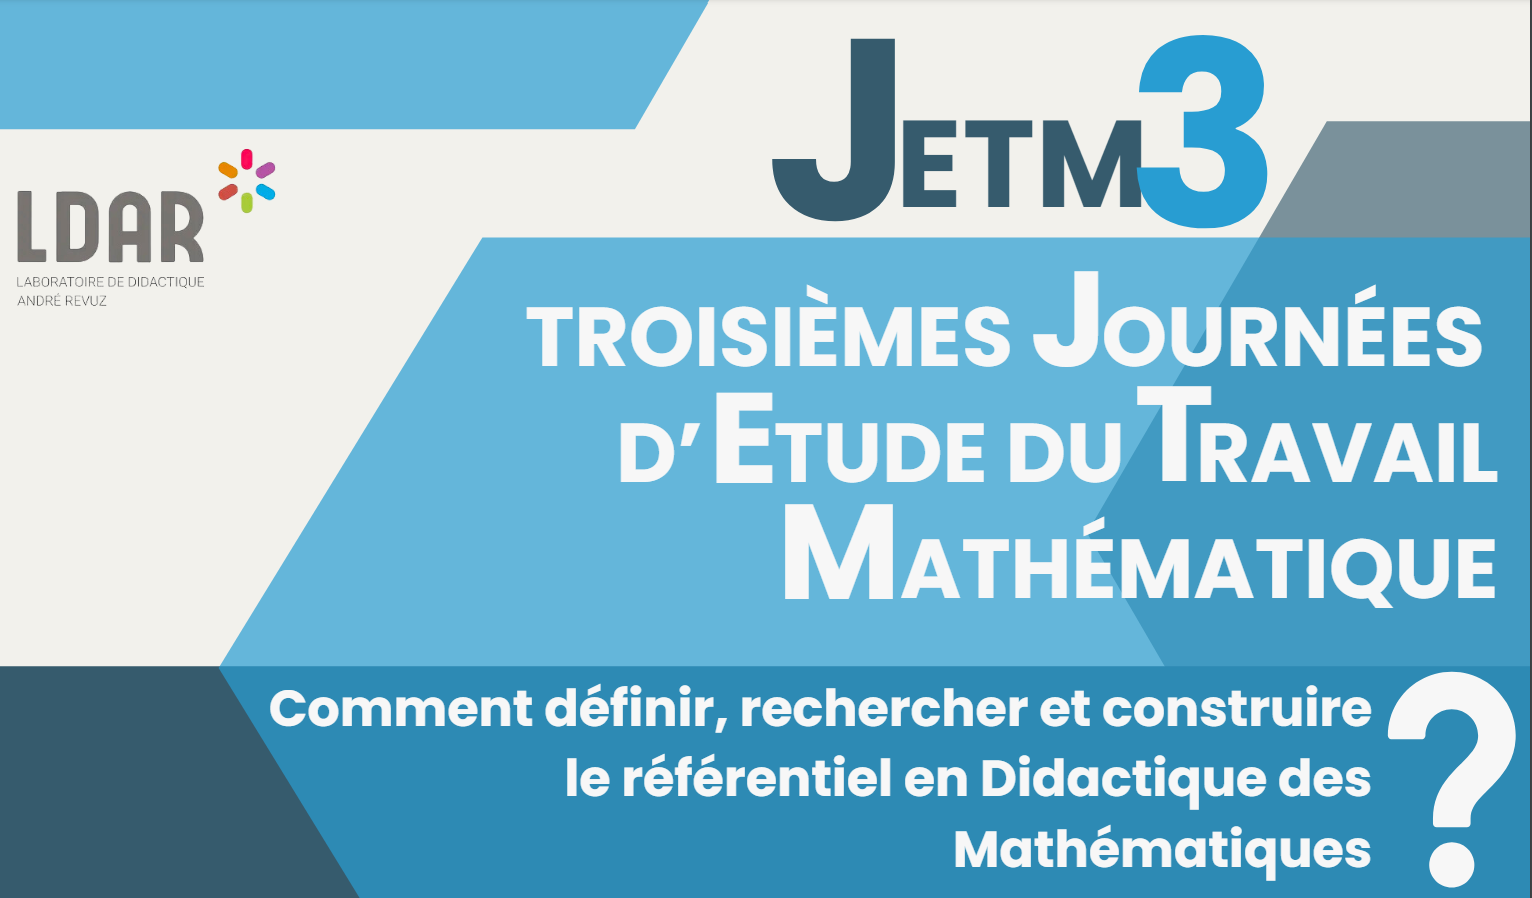 Third Study Days on Mathematical Work (JETM3)